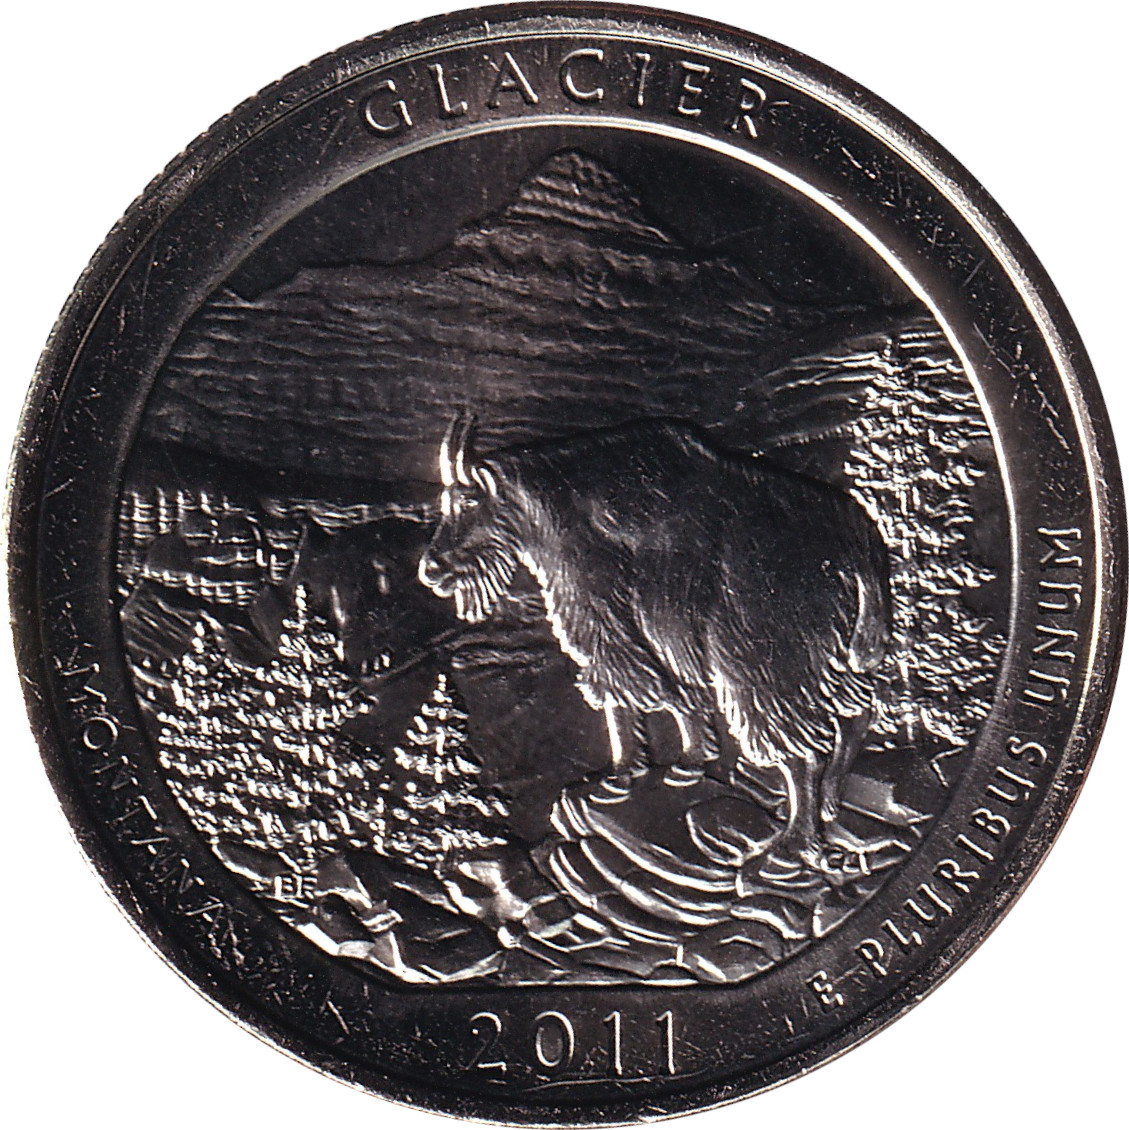 1/4 dollar - Montana - Glacier